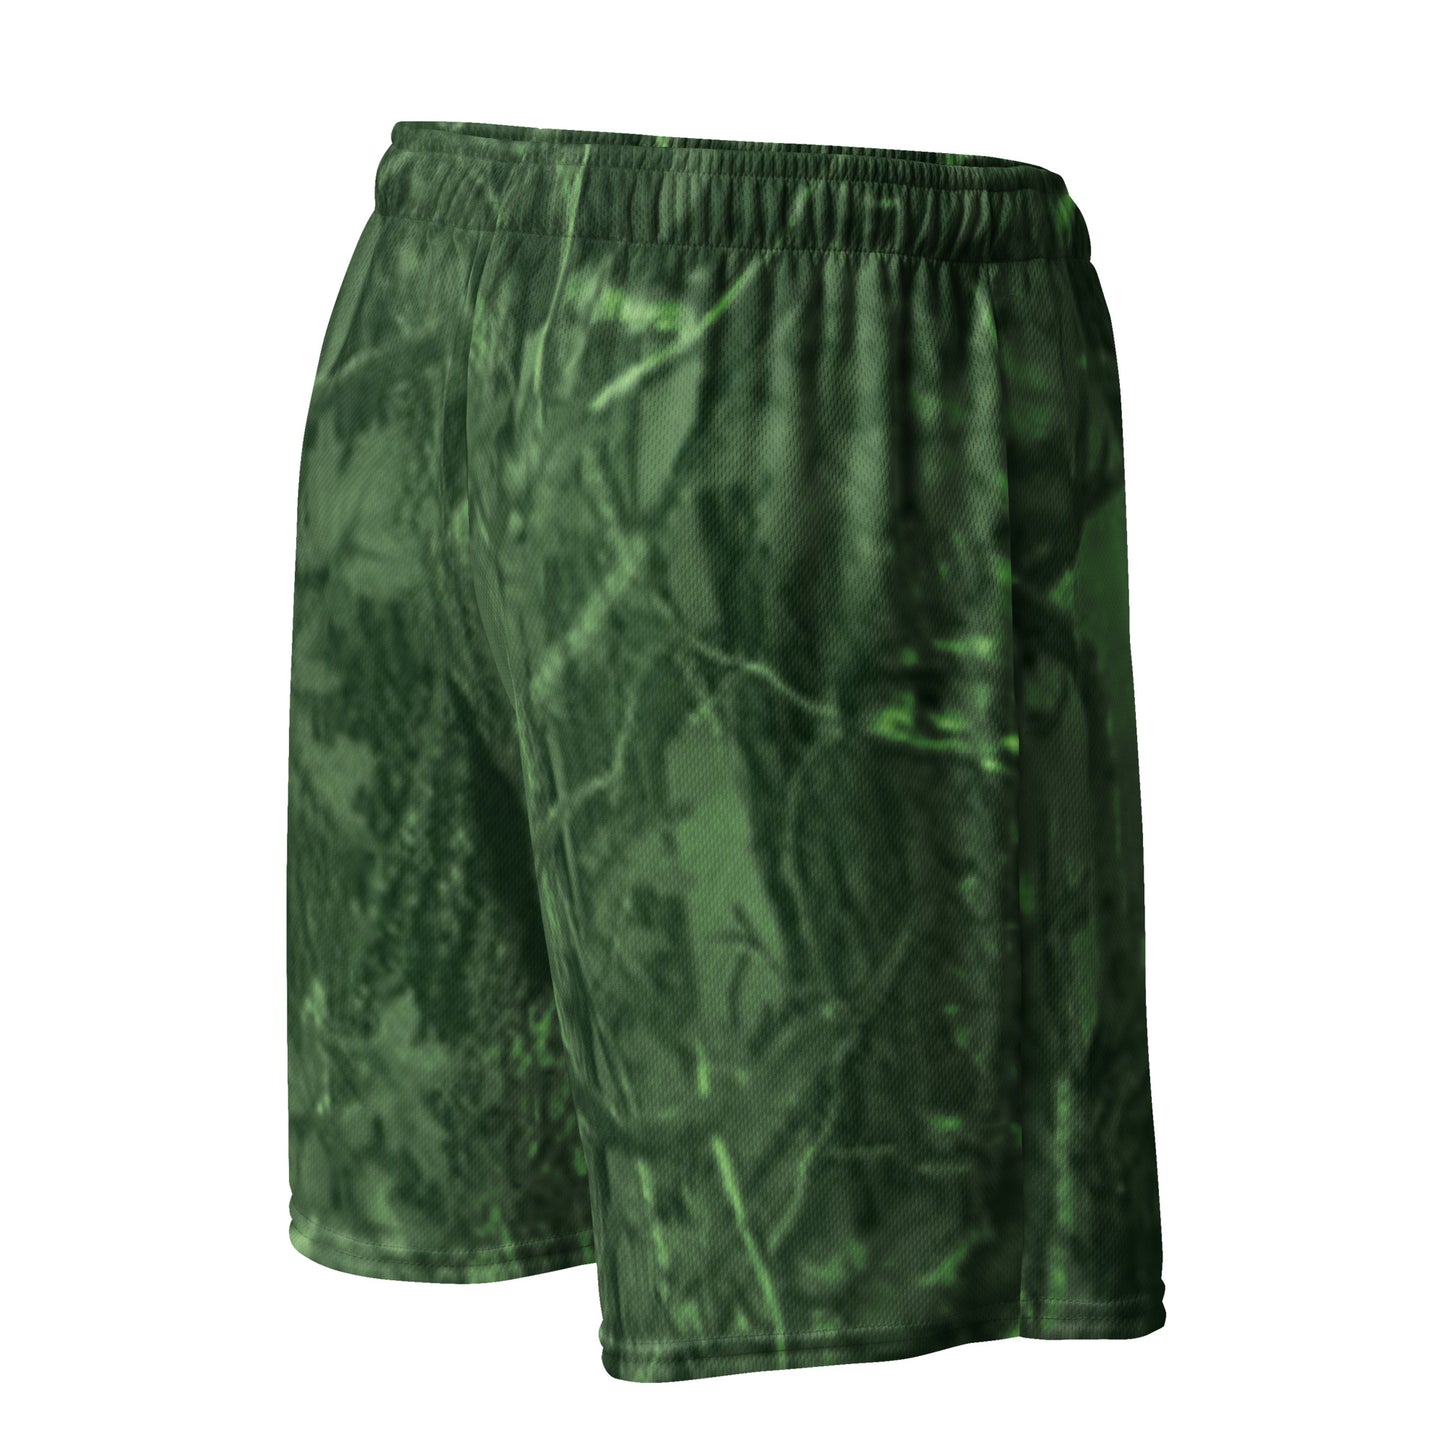 GREEN Unisex mesh shorts